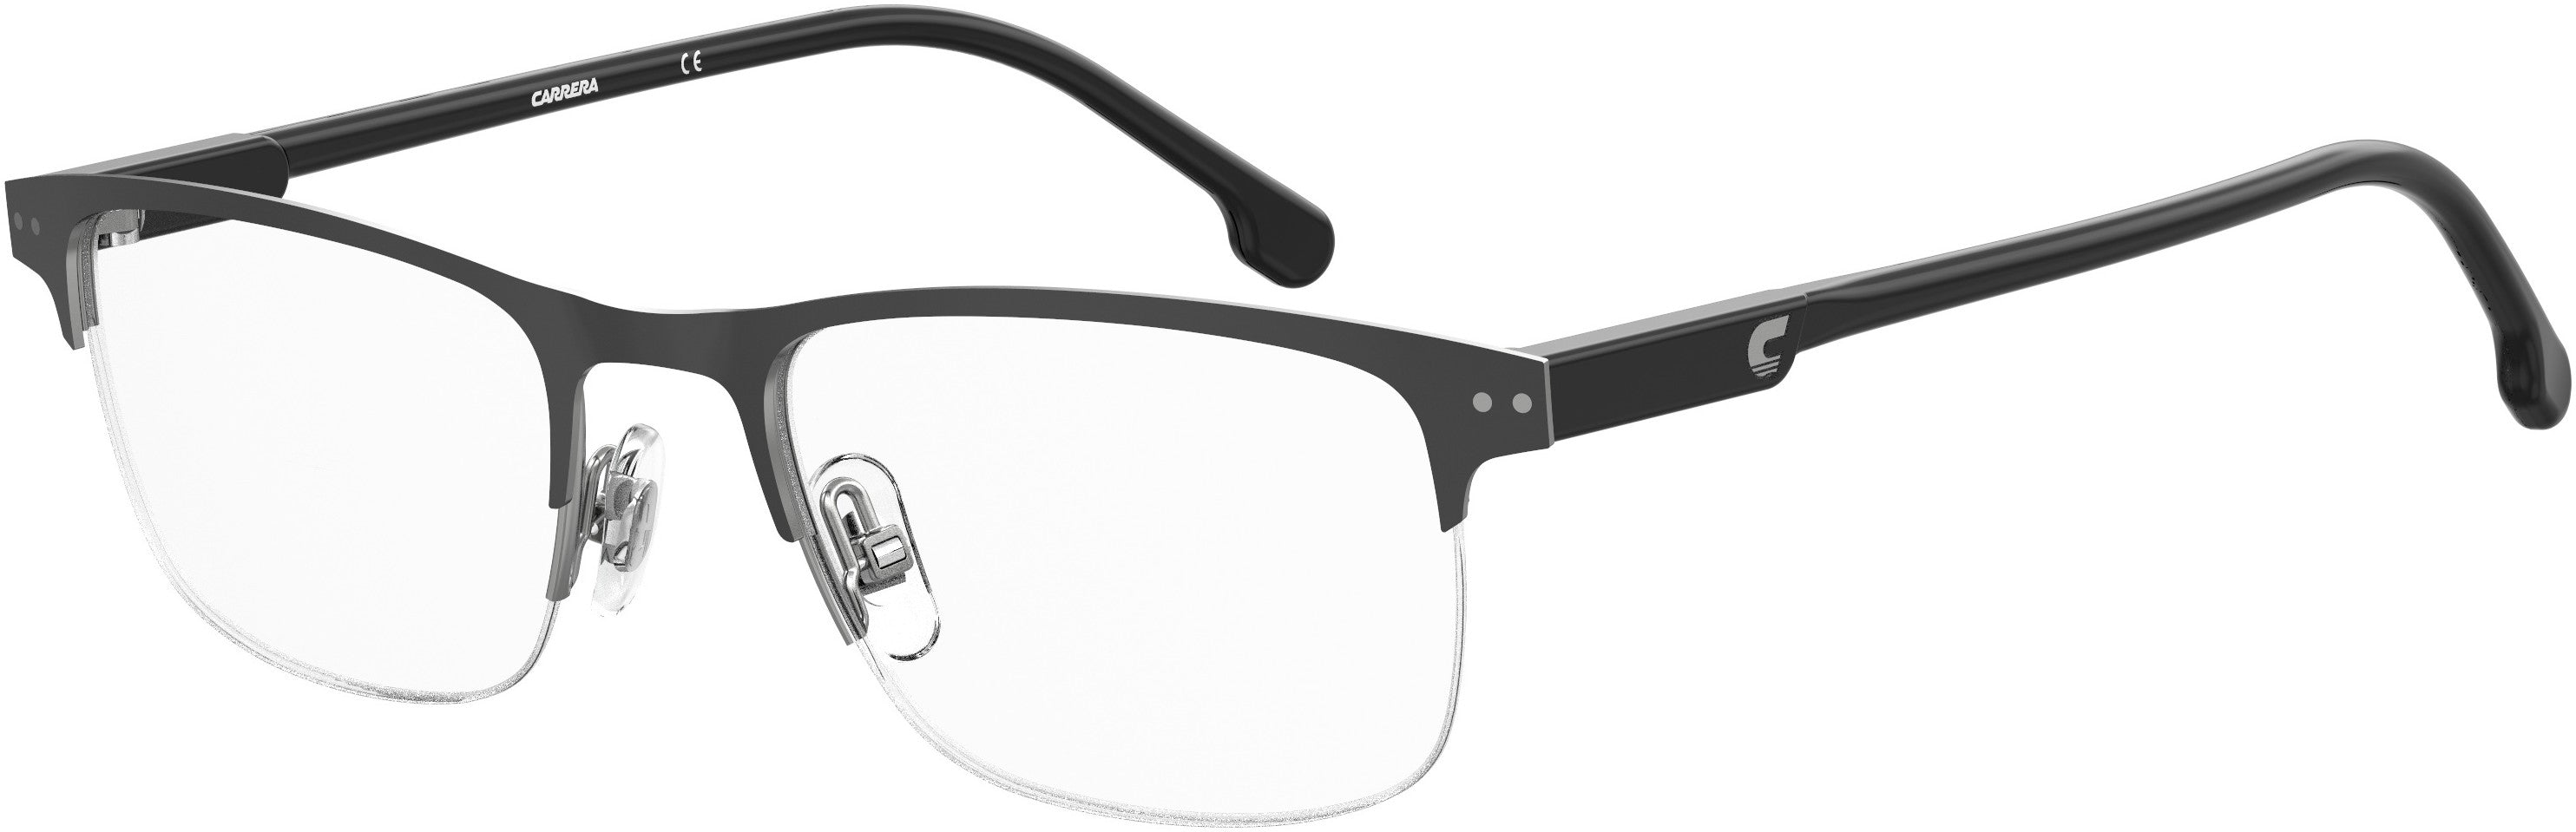  Carrera 2019/T Rectangular Eyeglasses 0807-0807  Black (00 Demo Lens)